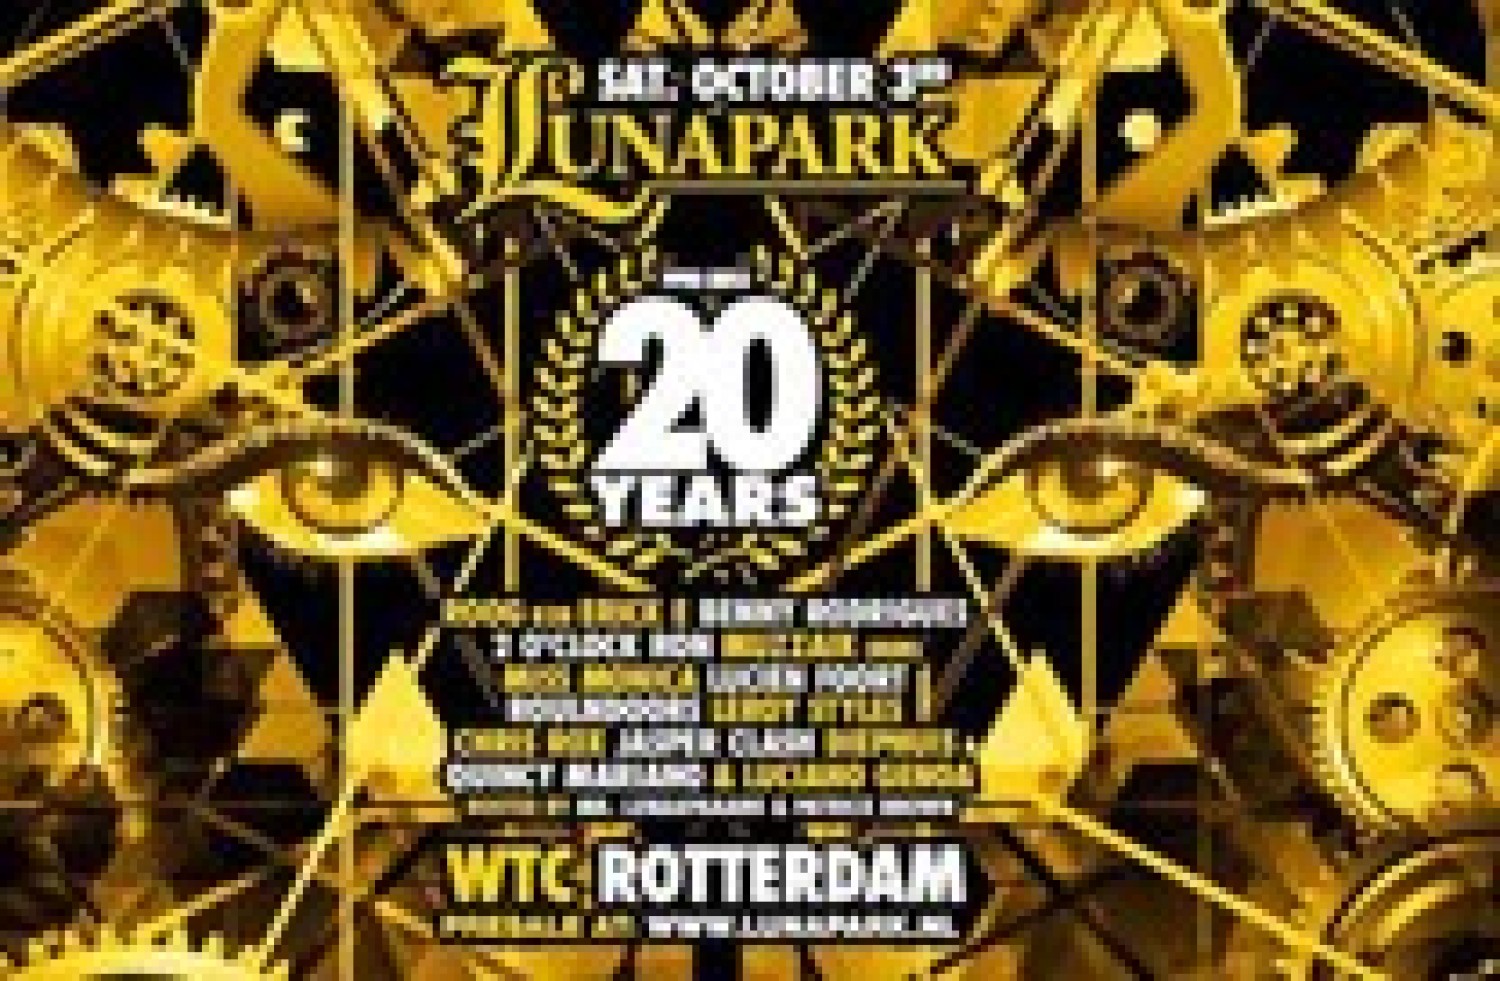 Party report: Lunapark, Rotterdam (03-10-2015)